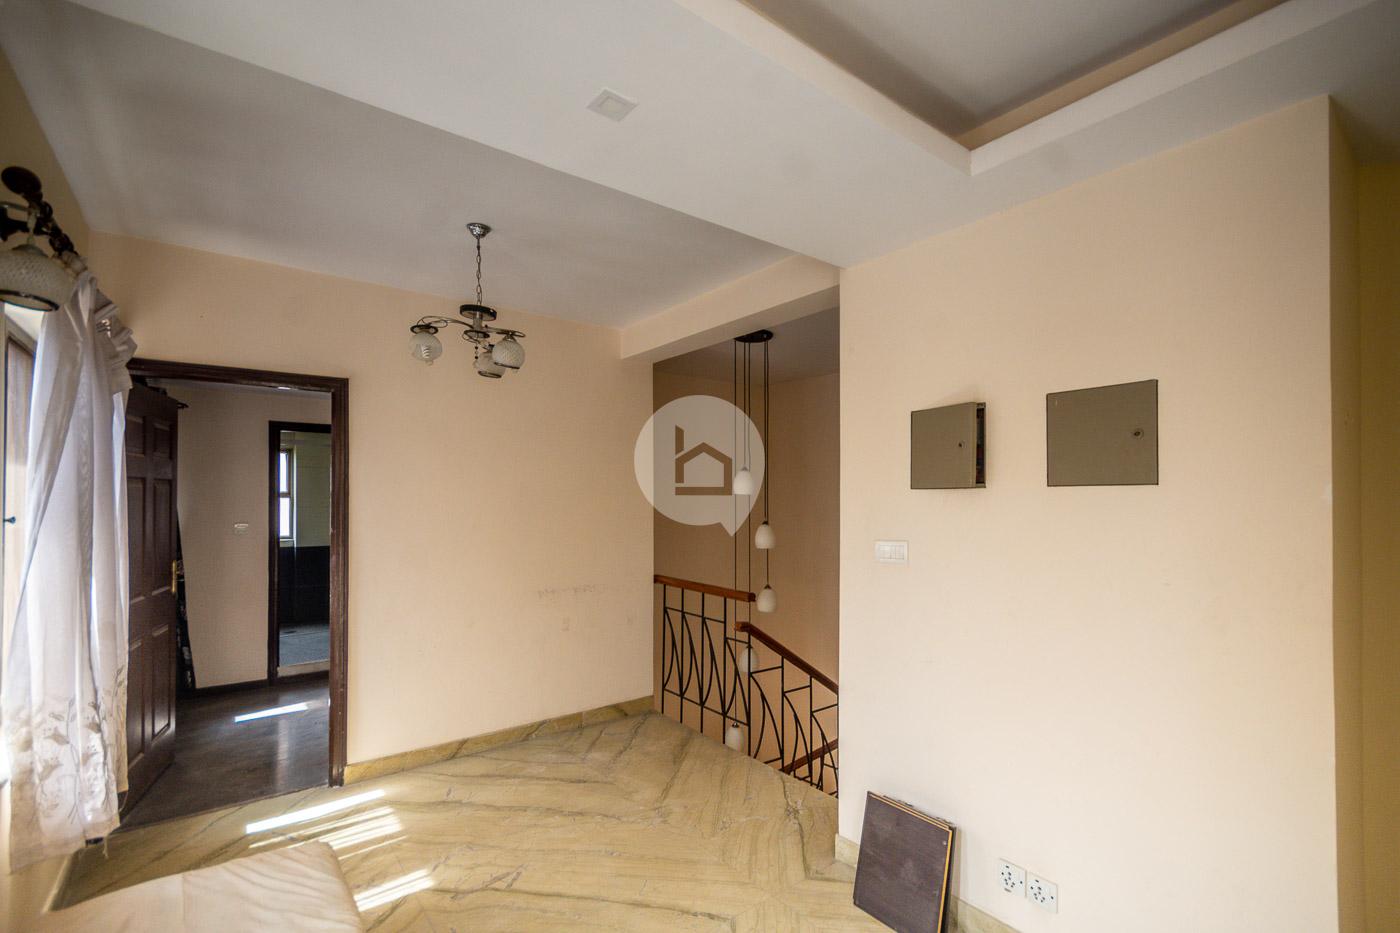 COLONY House : House for Sale in Baluwatar, Kathmandu Image 13